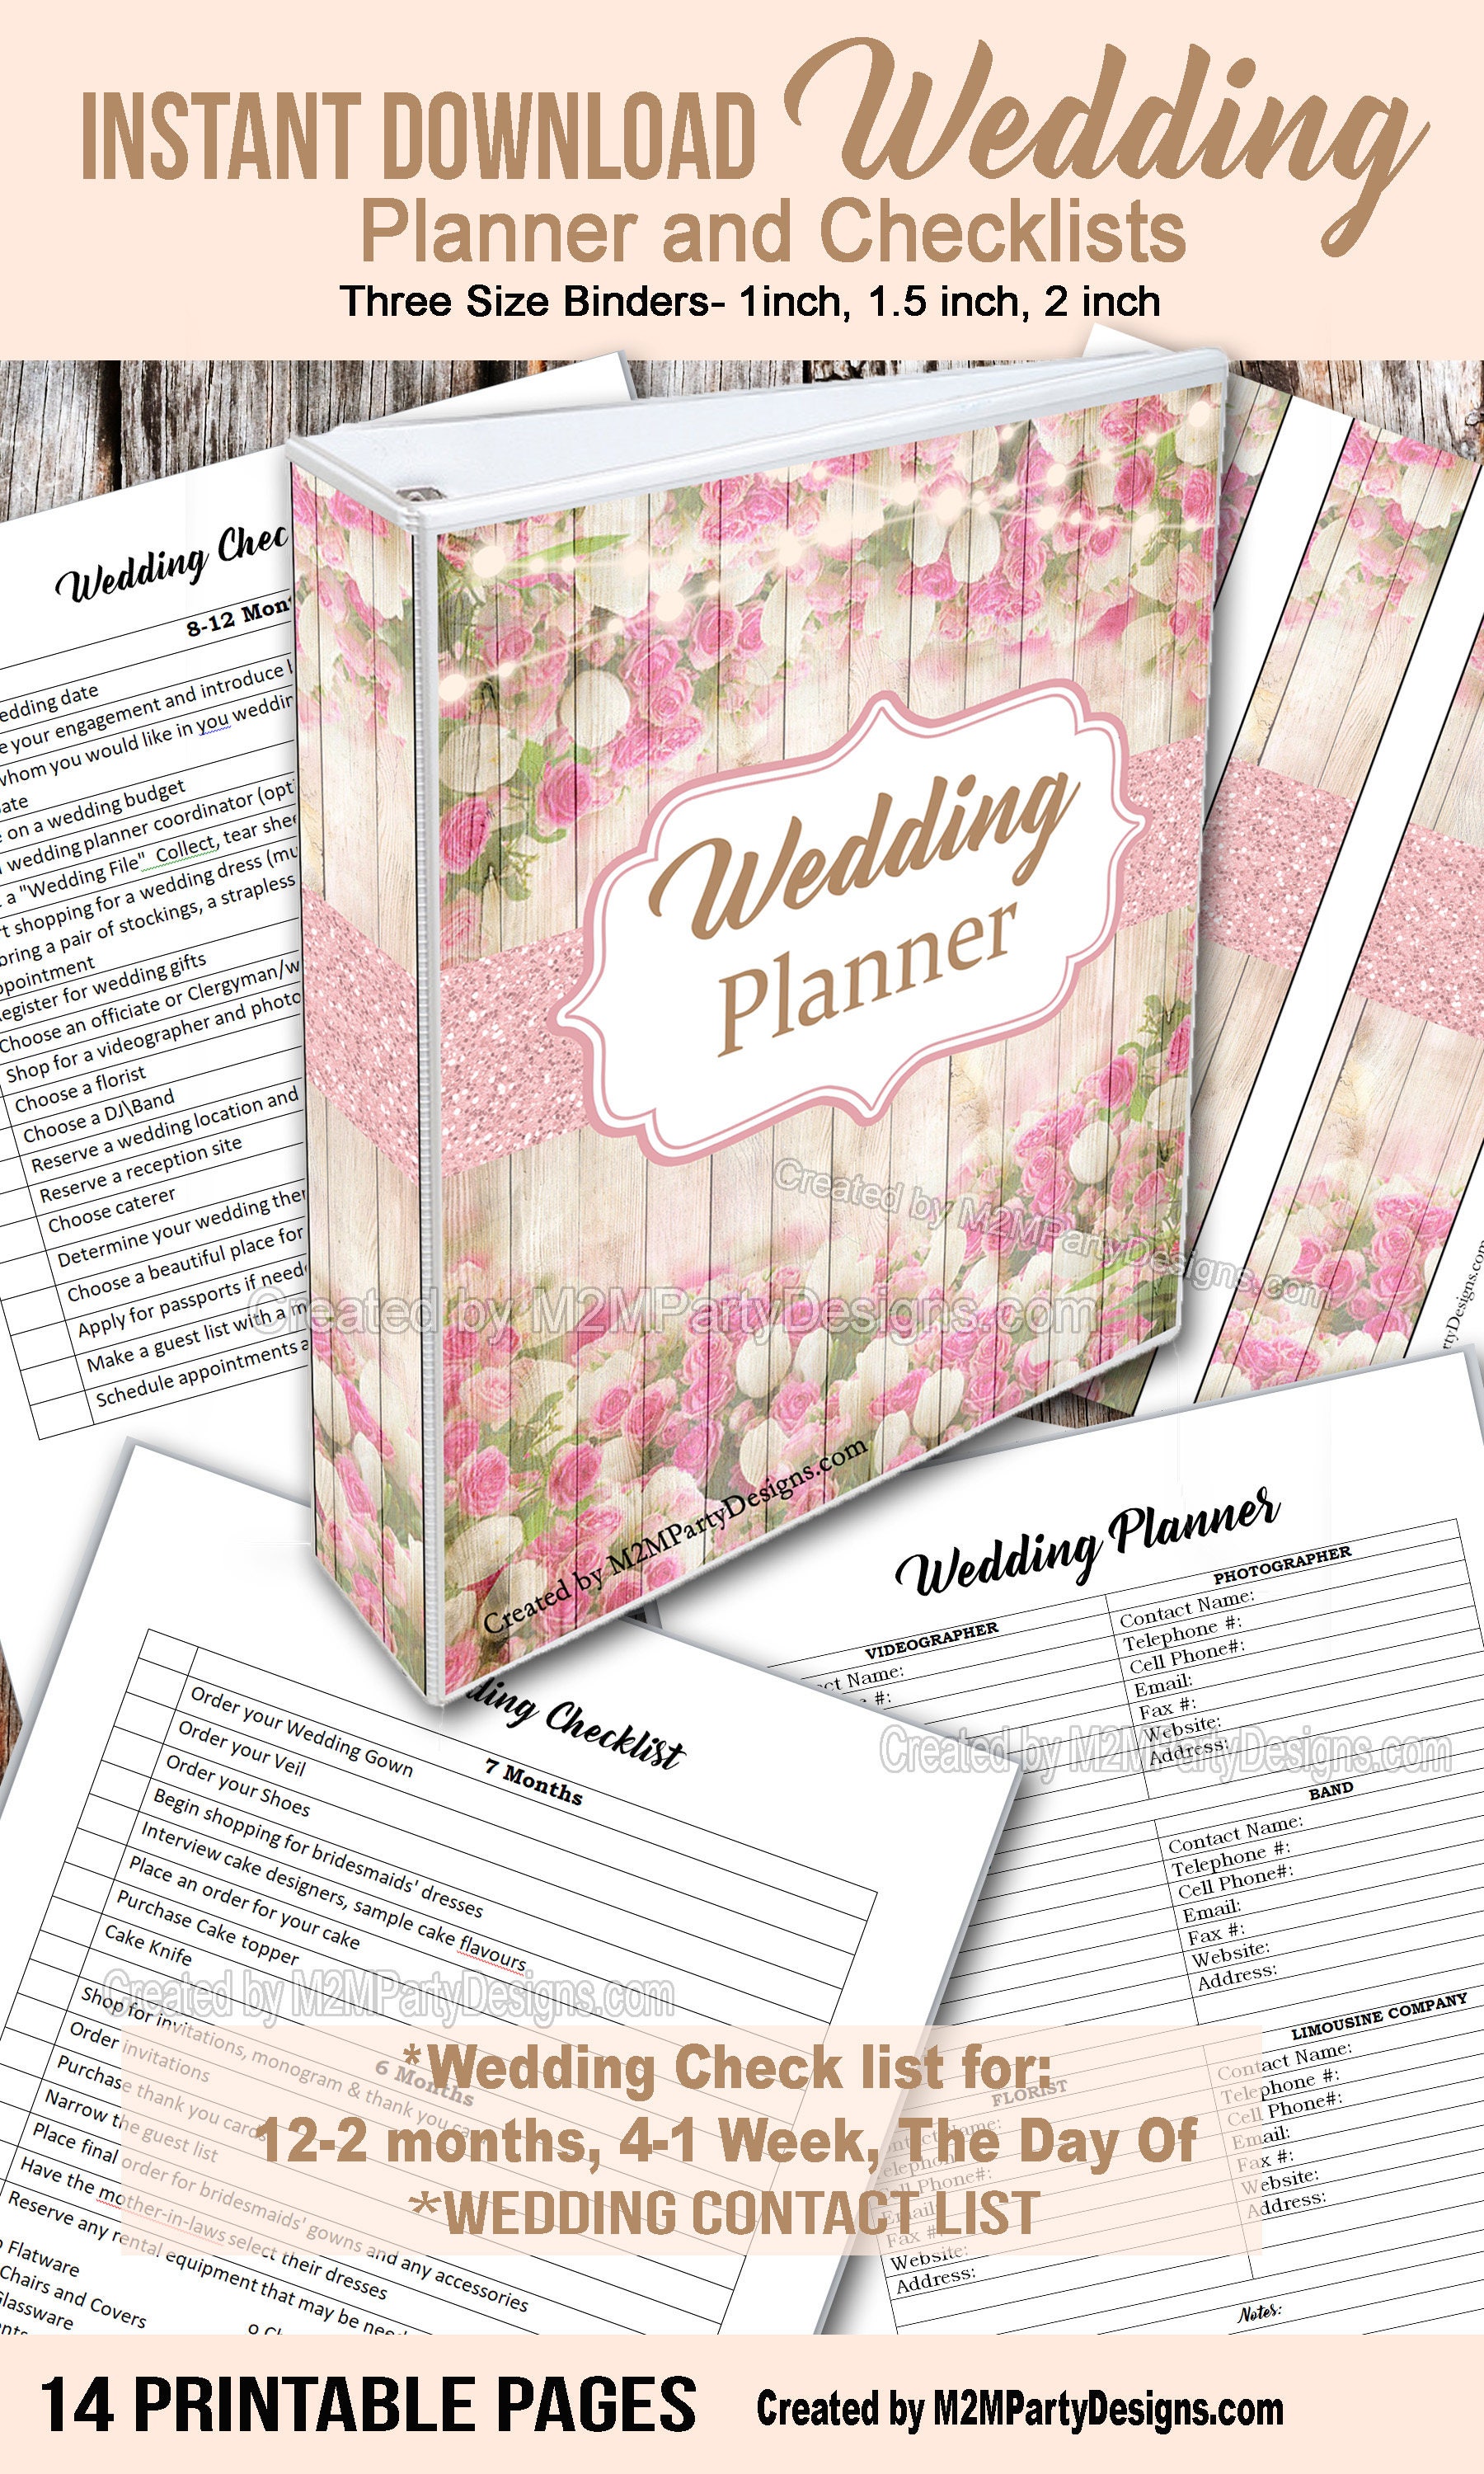 Free Printable Wedding Planner for Wedding Binder!